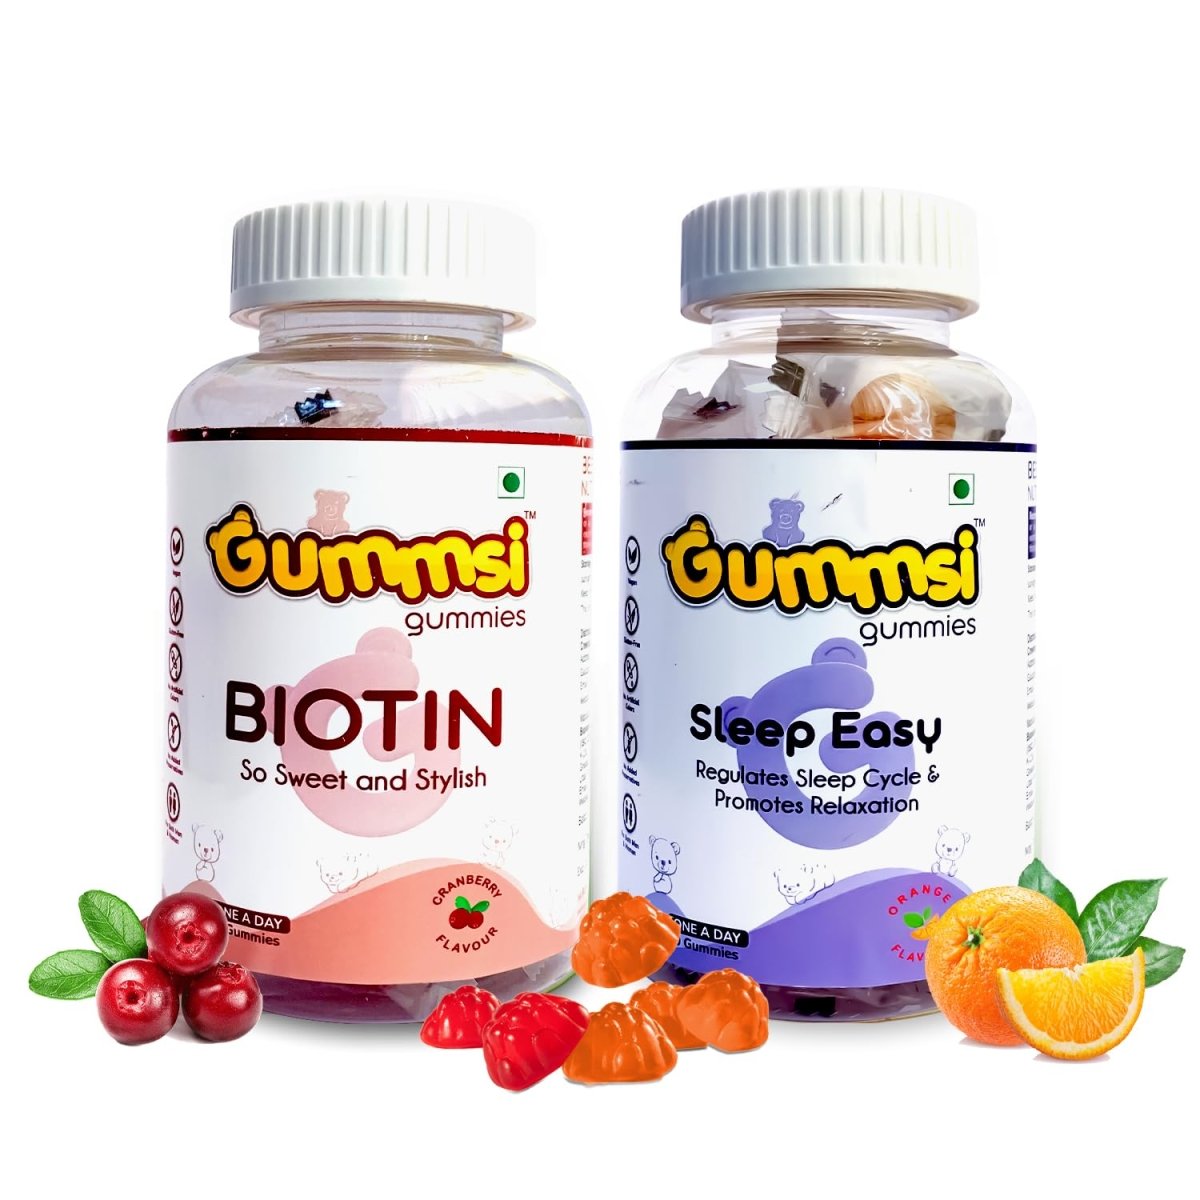 Sleep Easy + Biotin Gummies